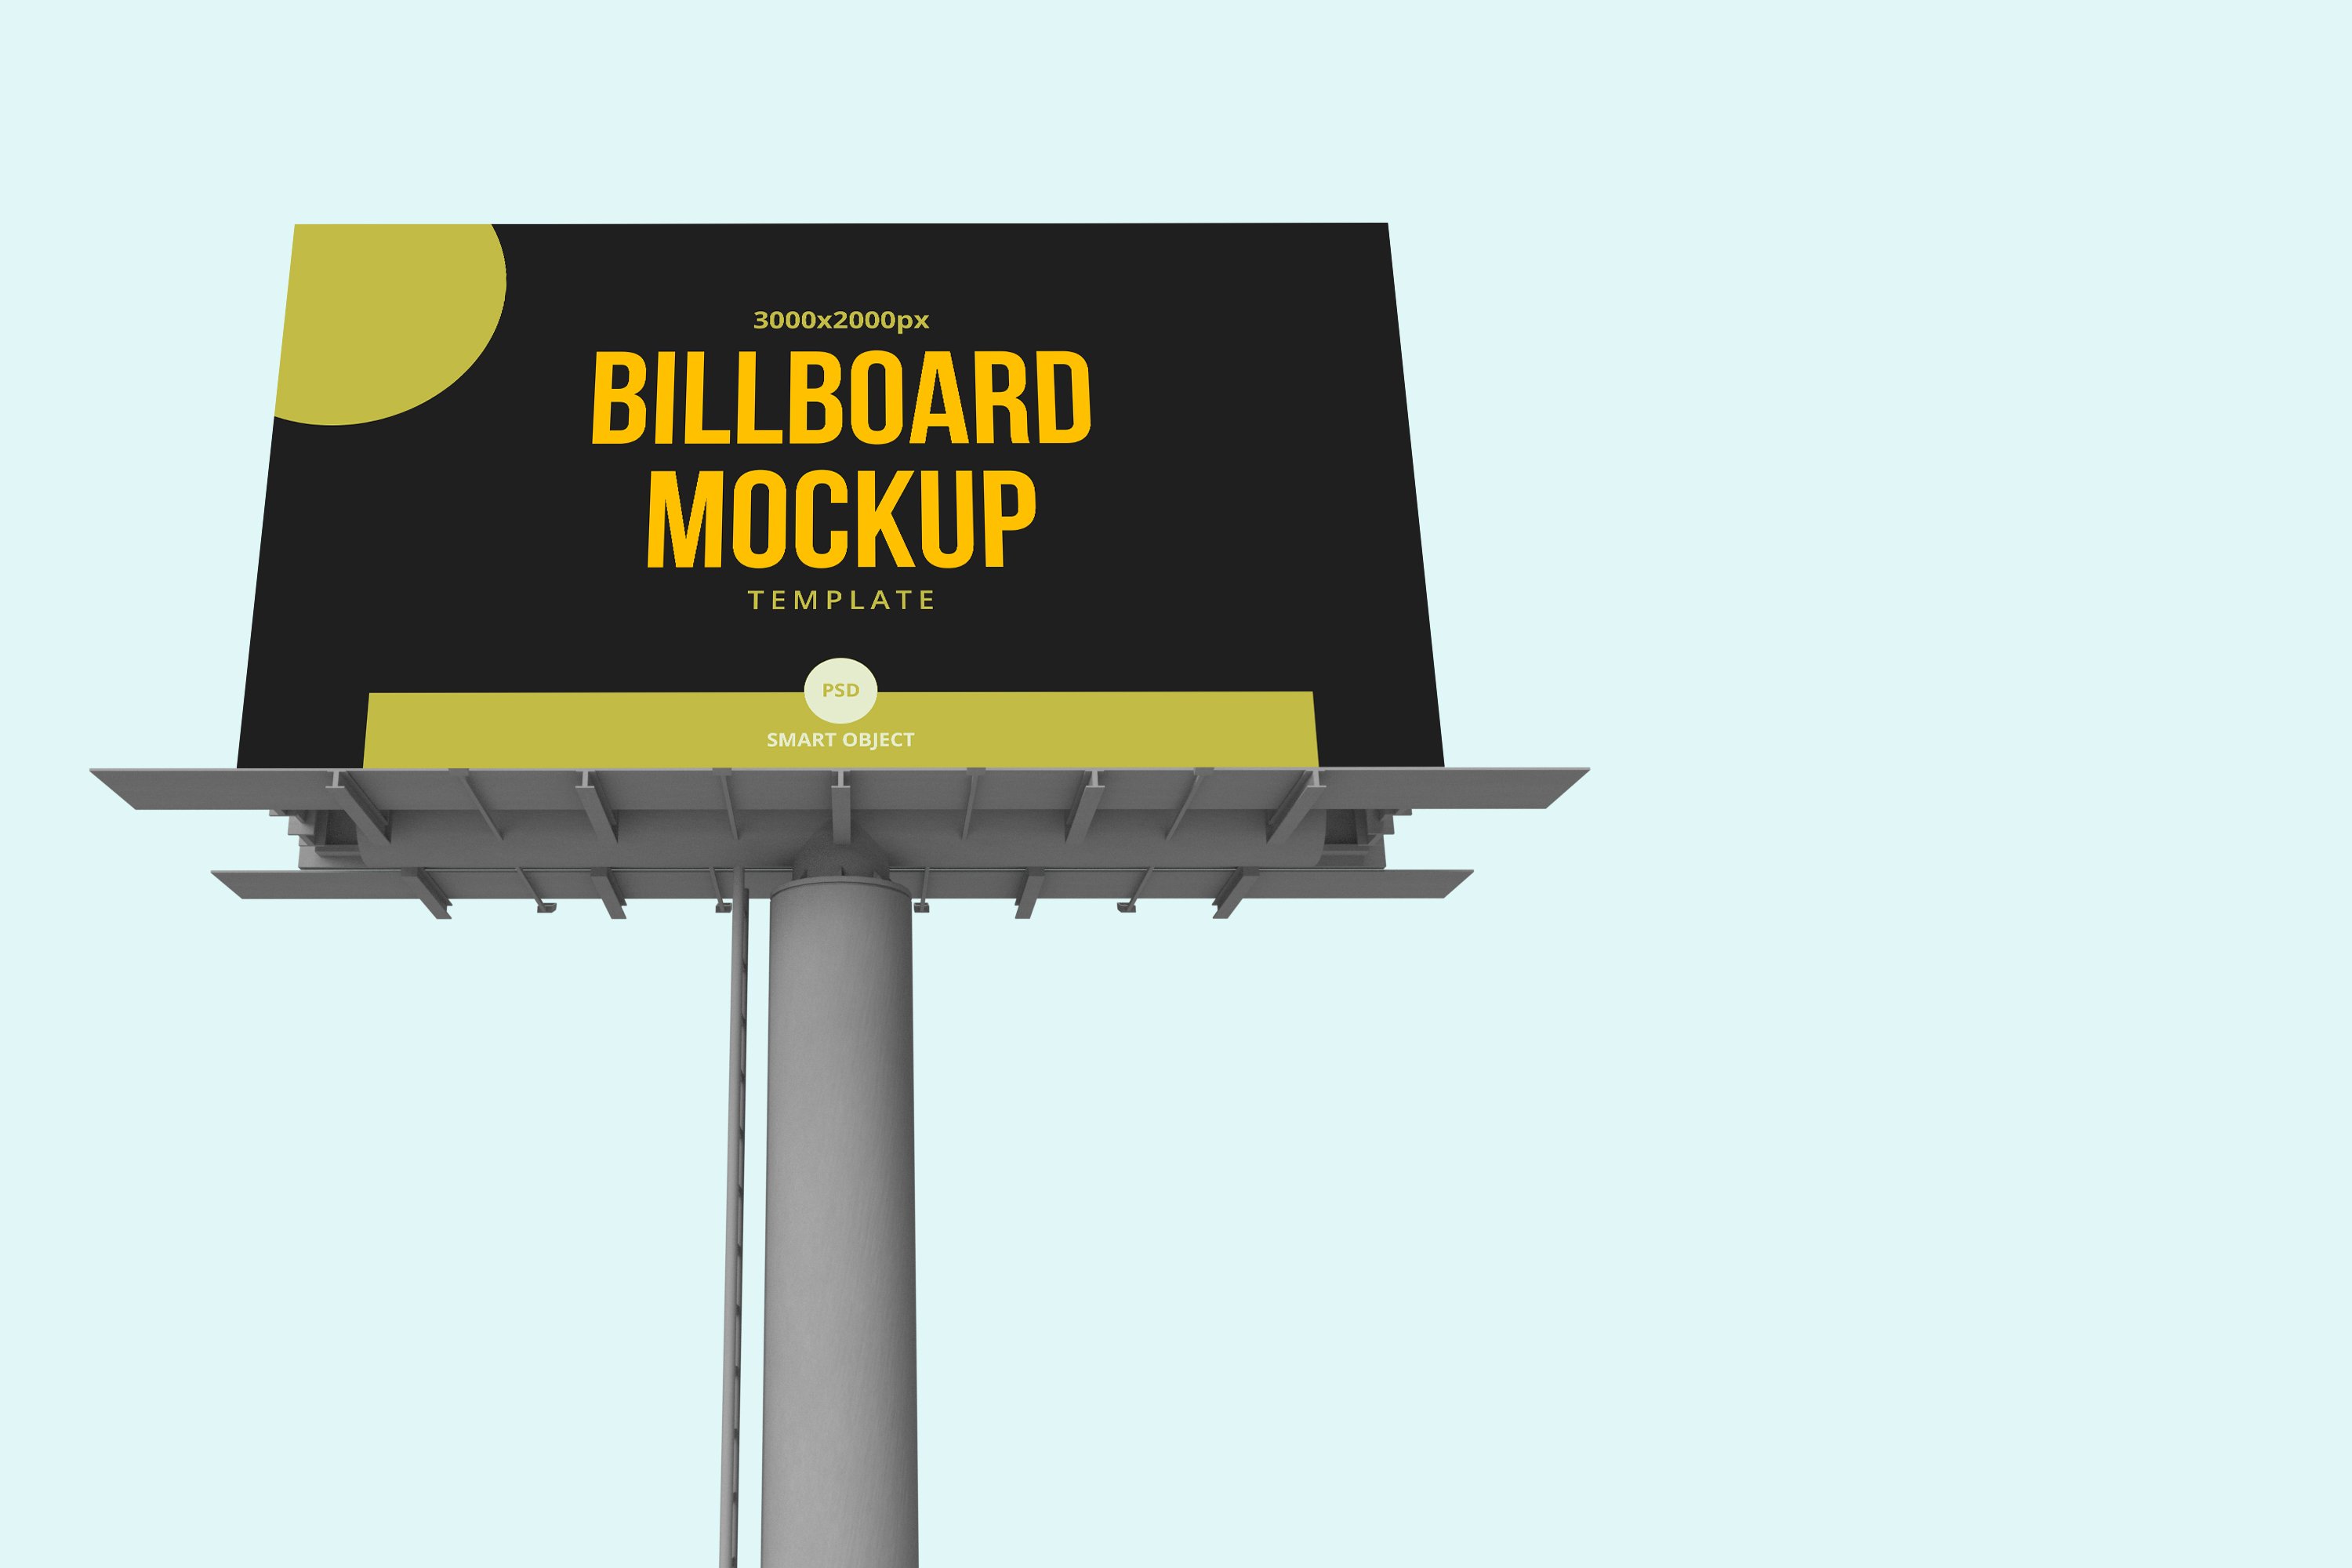 Billboard Mockup Template cover image.